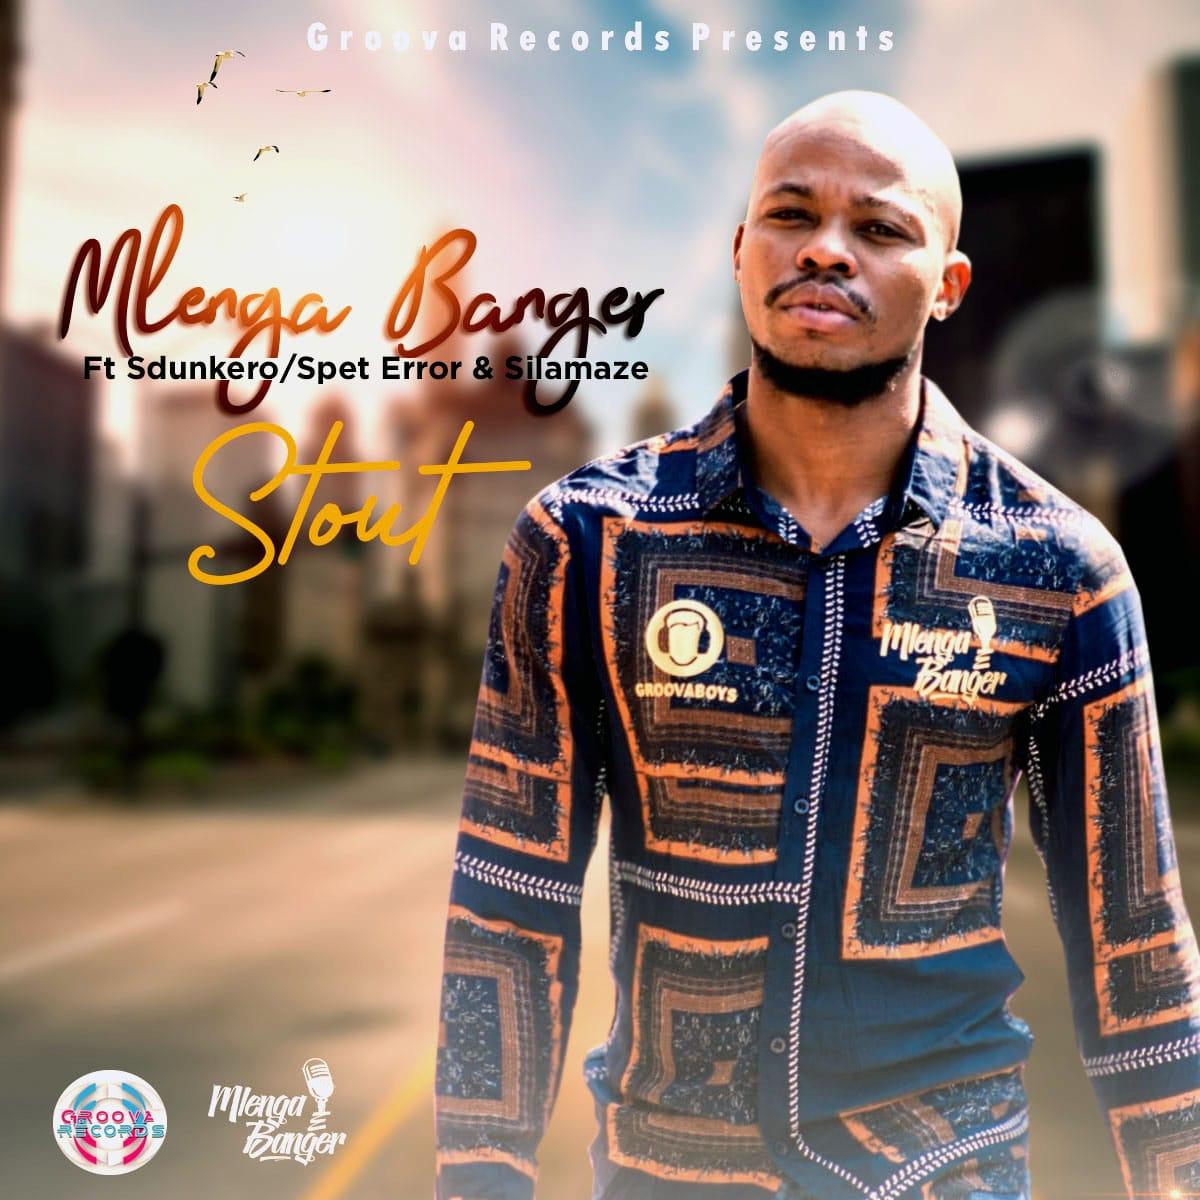 Mlenga Banger - Stout (feat. Dj Sdunkero Spet Error & Silamaze)